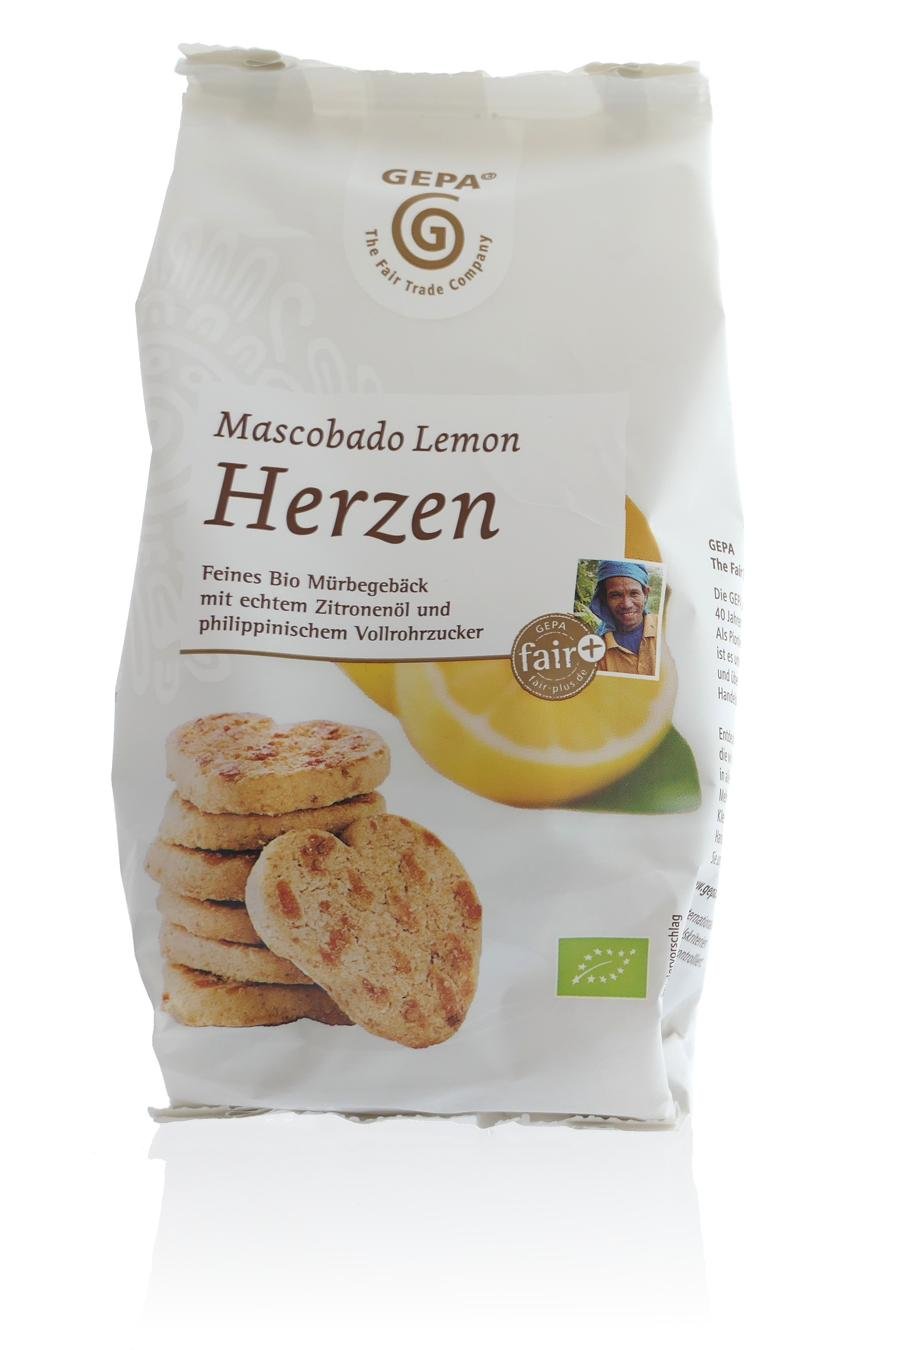 Mascobado-Lemon-Herzen (c) M. Kerk